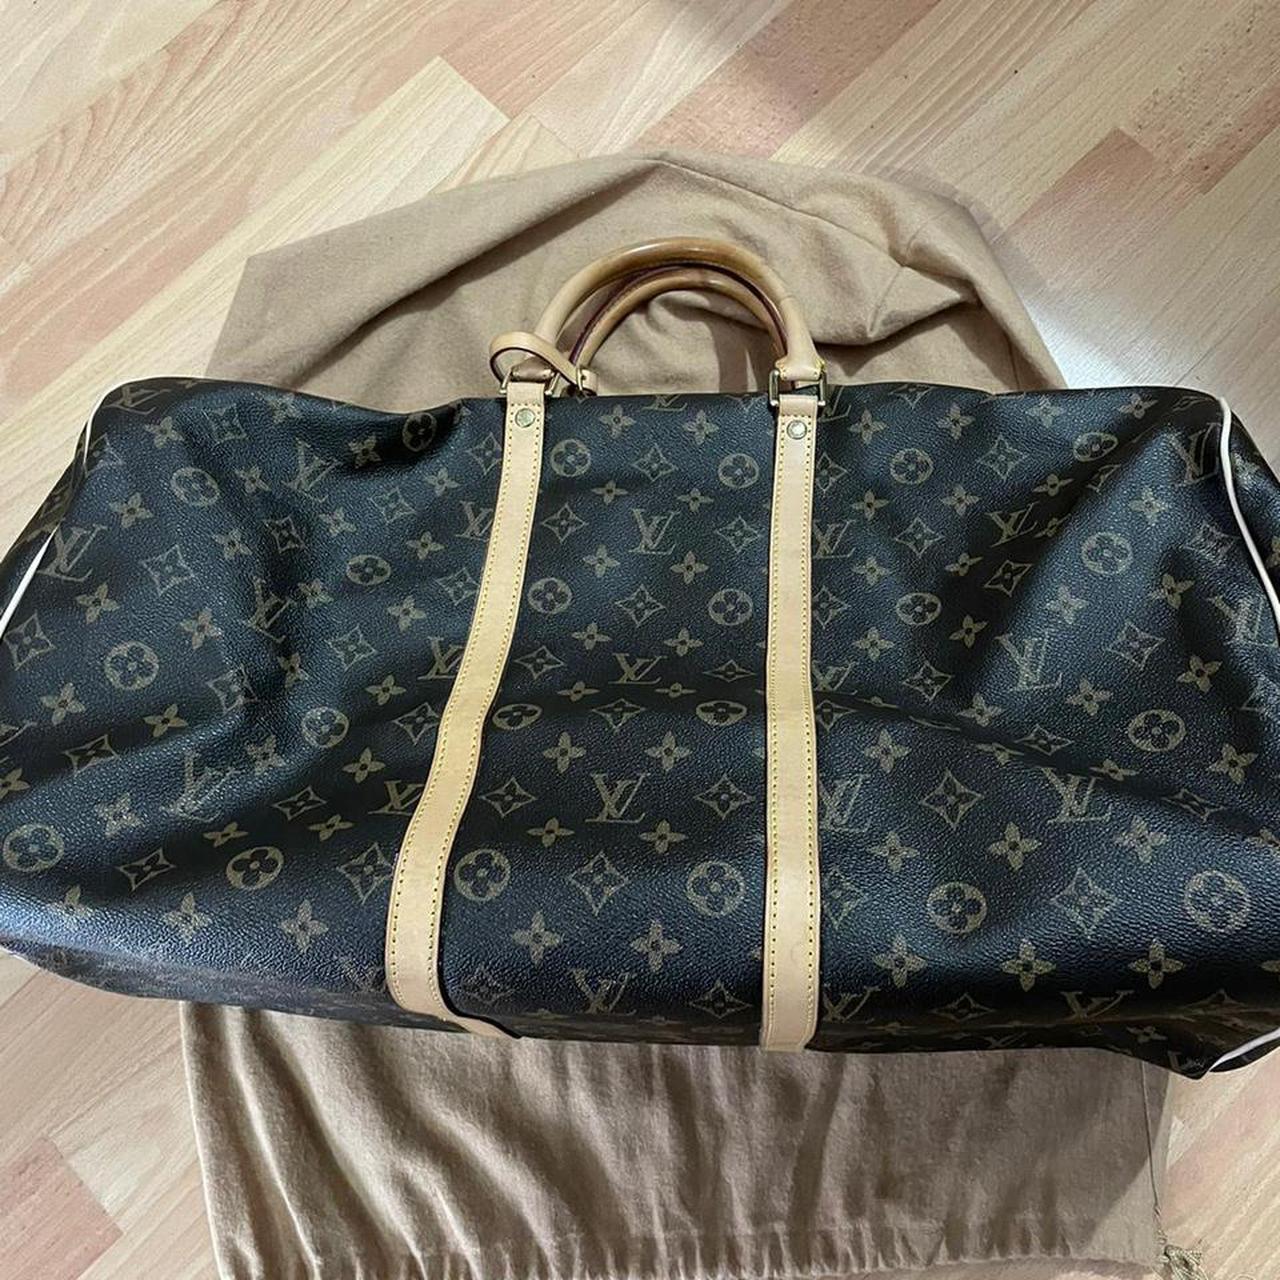 Vintage Louis Vuitton duffle bag 60cm in great - Depop